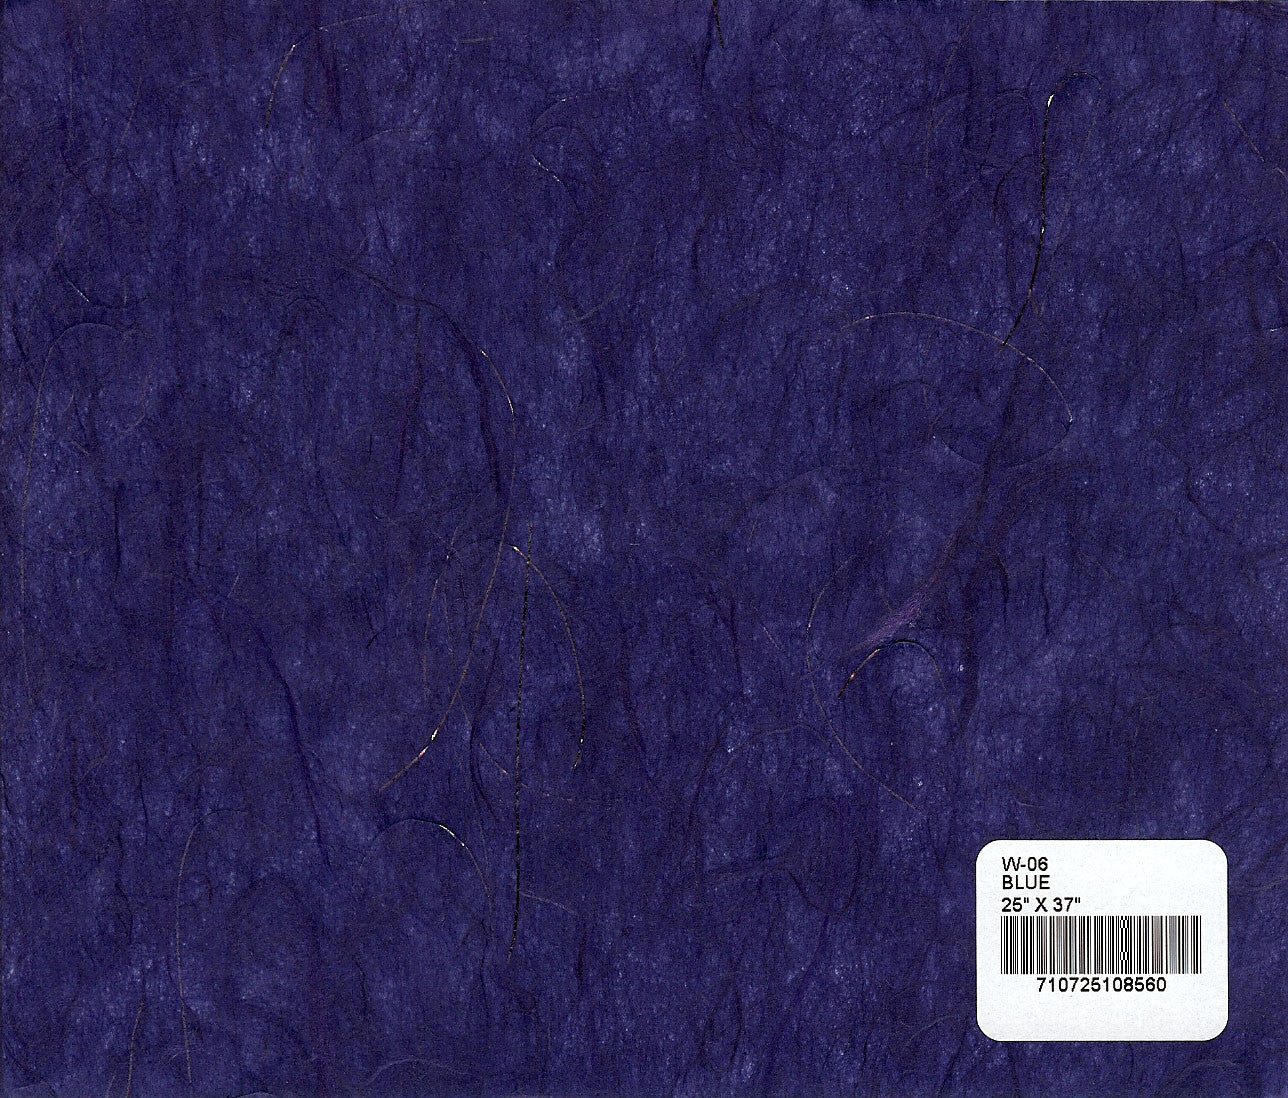 Thai Unryu/Mulberry Paper - PALE BLUE